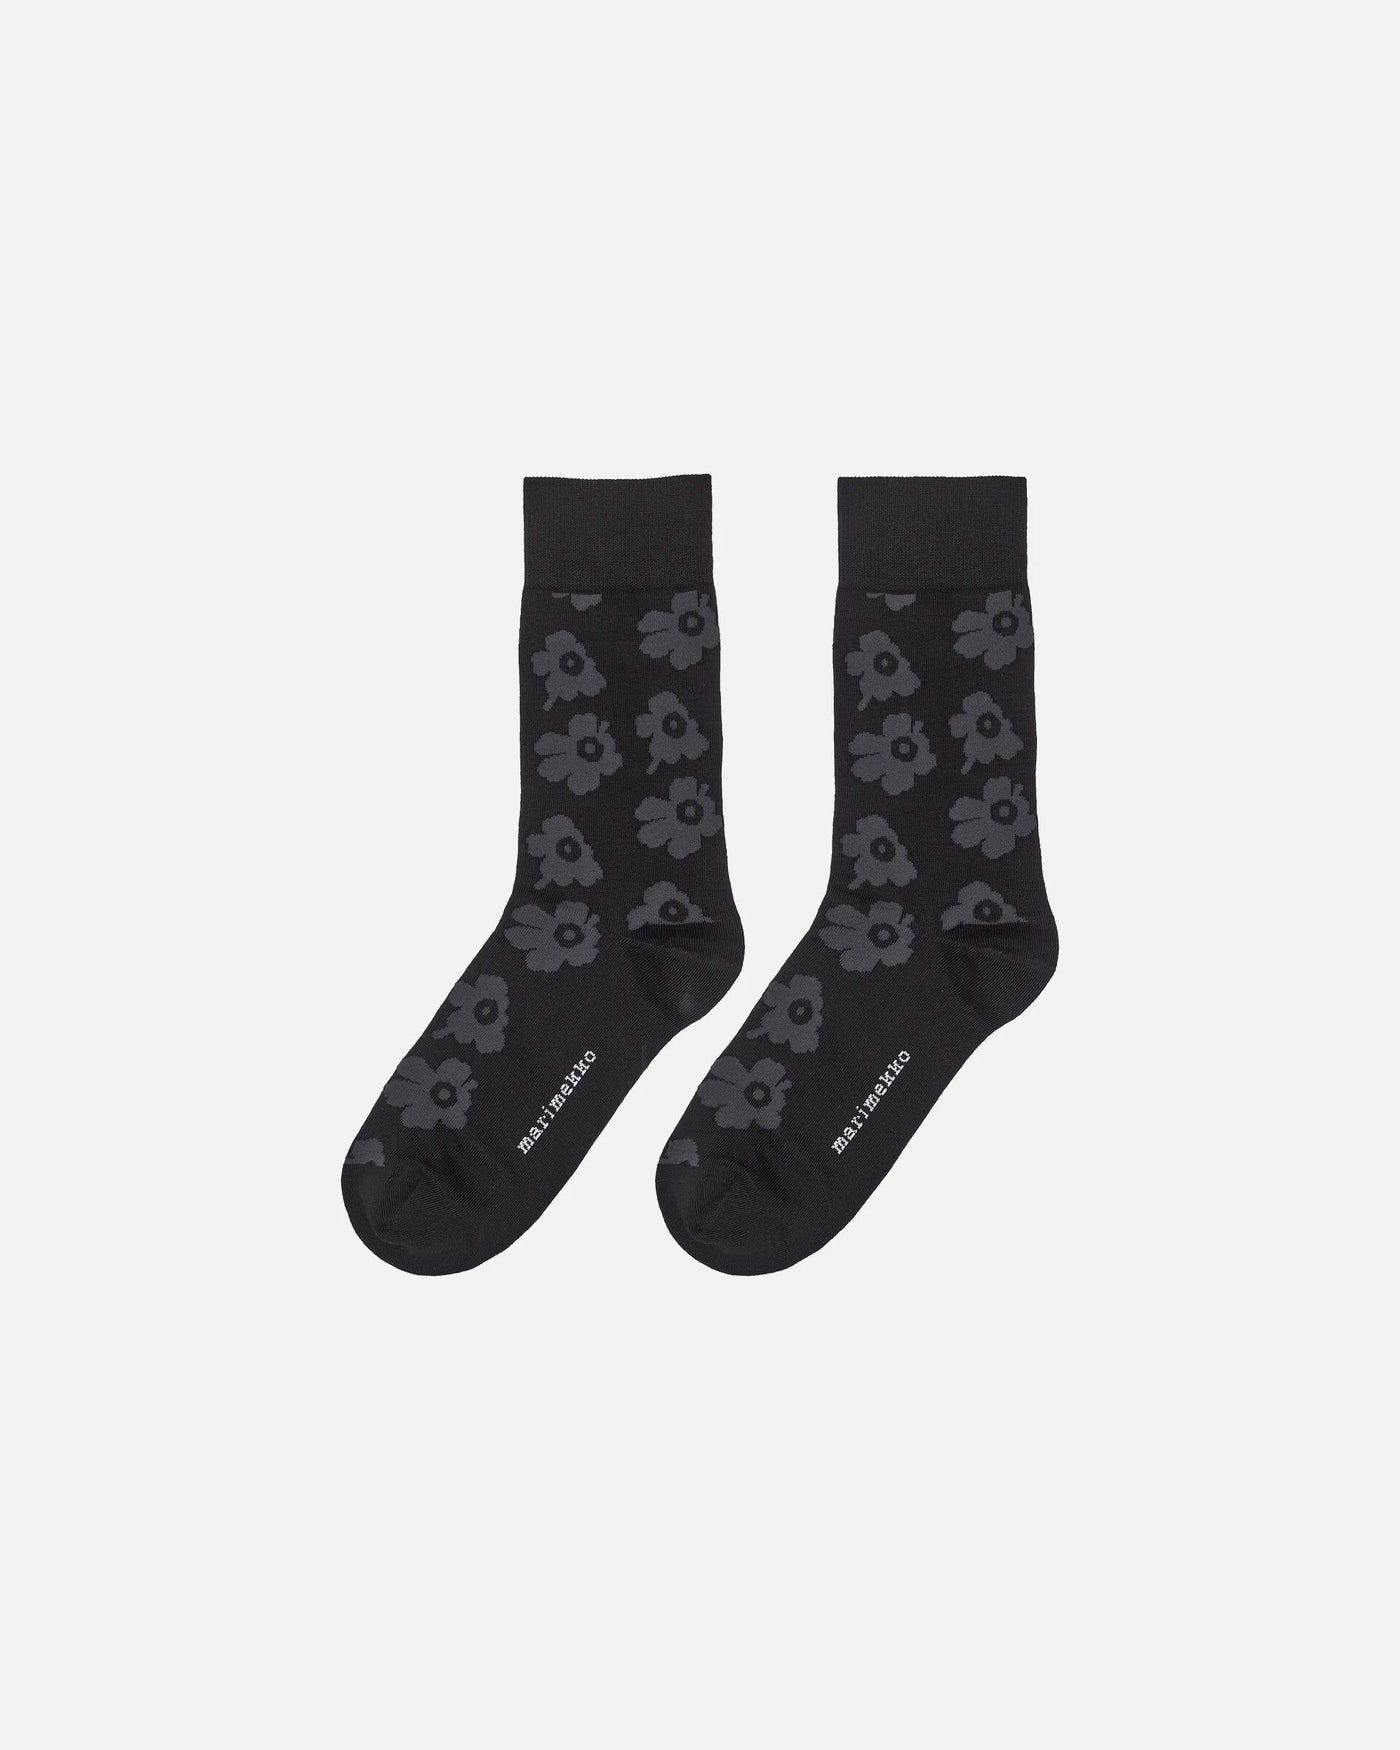 Kasvaa Juhlaunikko Socks, Black/Dk. Grey